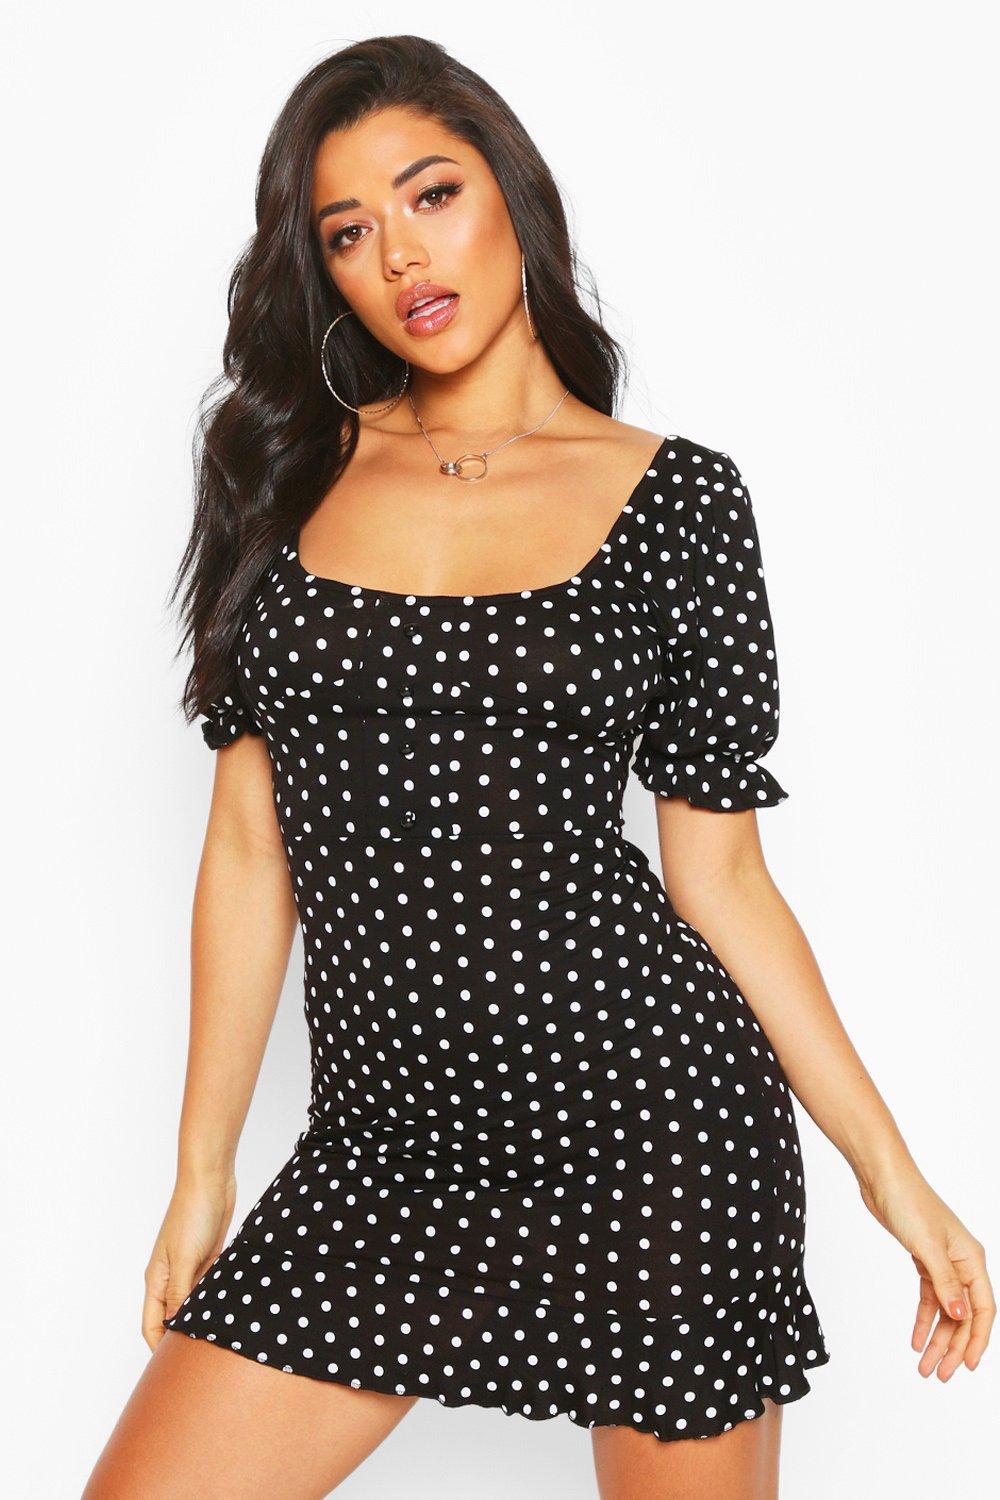 black polka dot mini dress